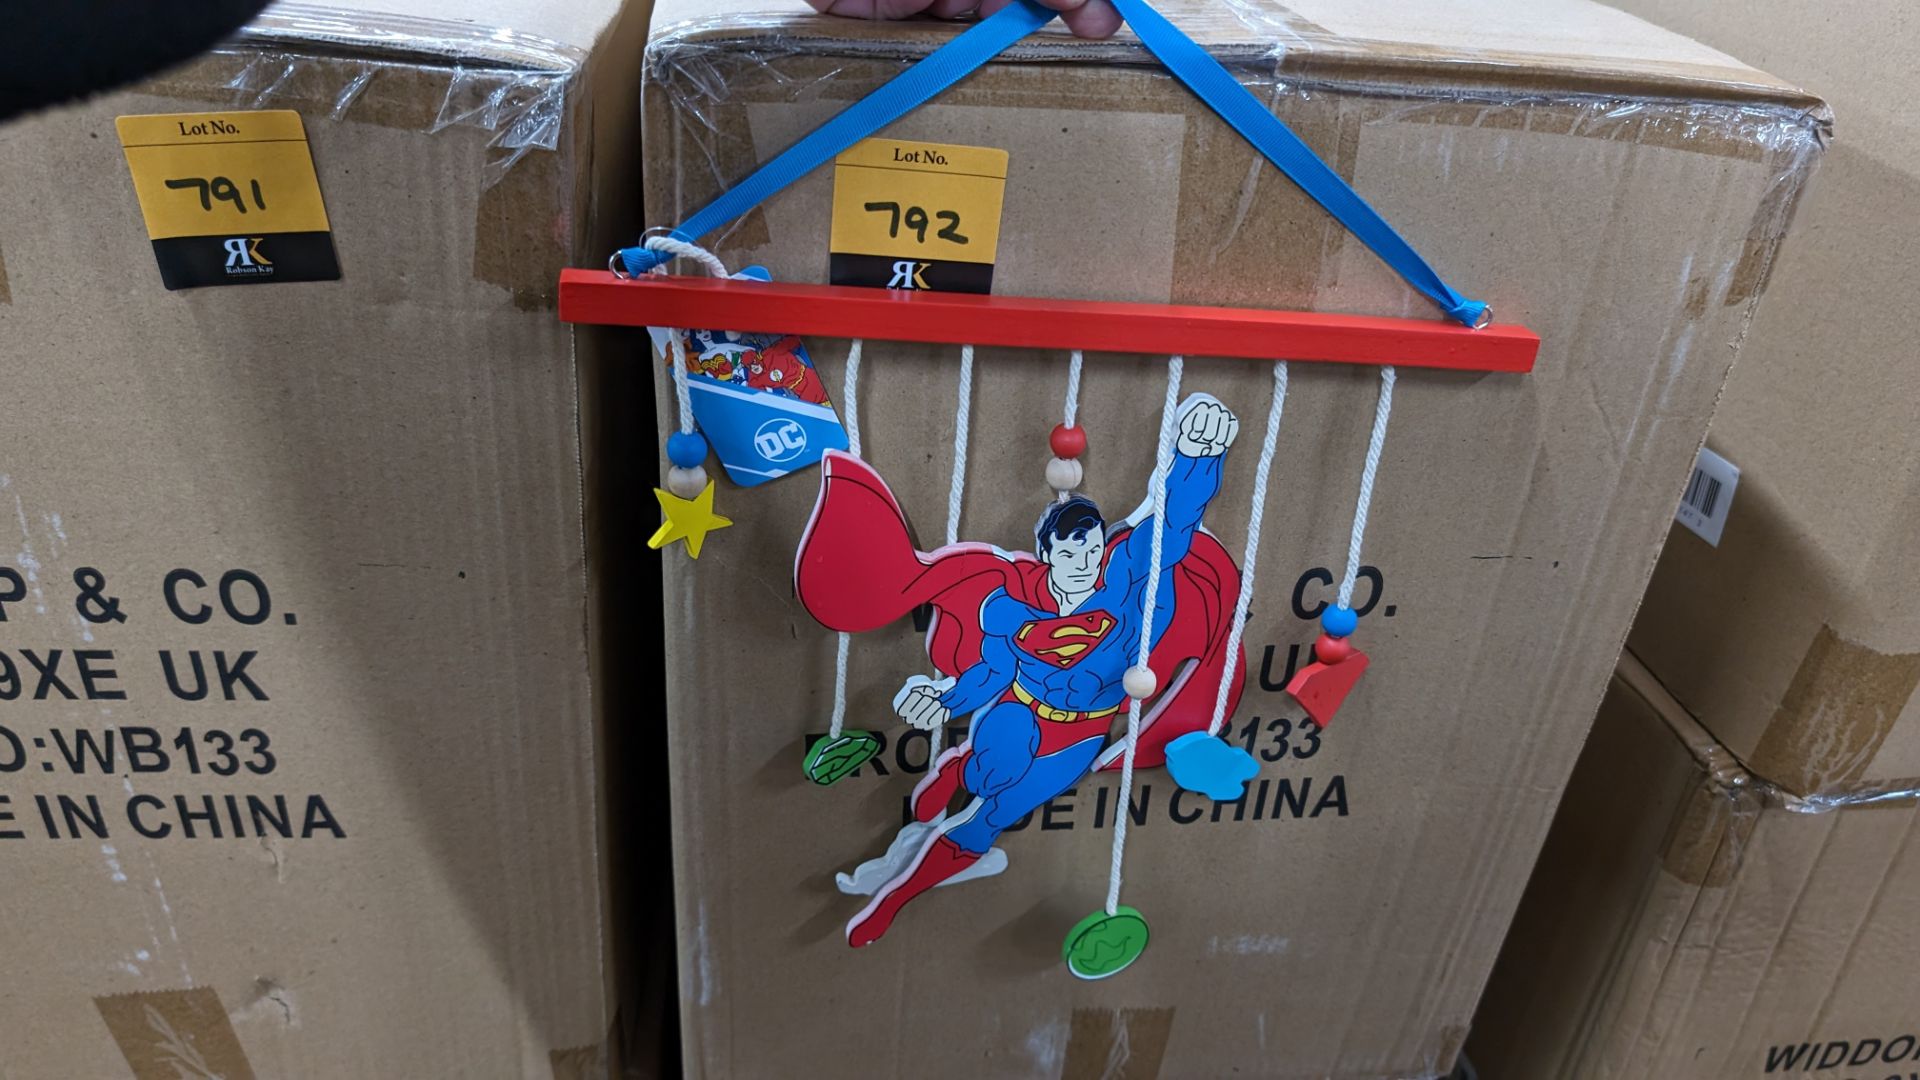 108 off Superman wooden mobiles - 3 cartons